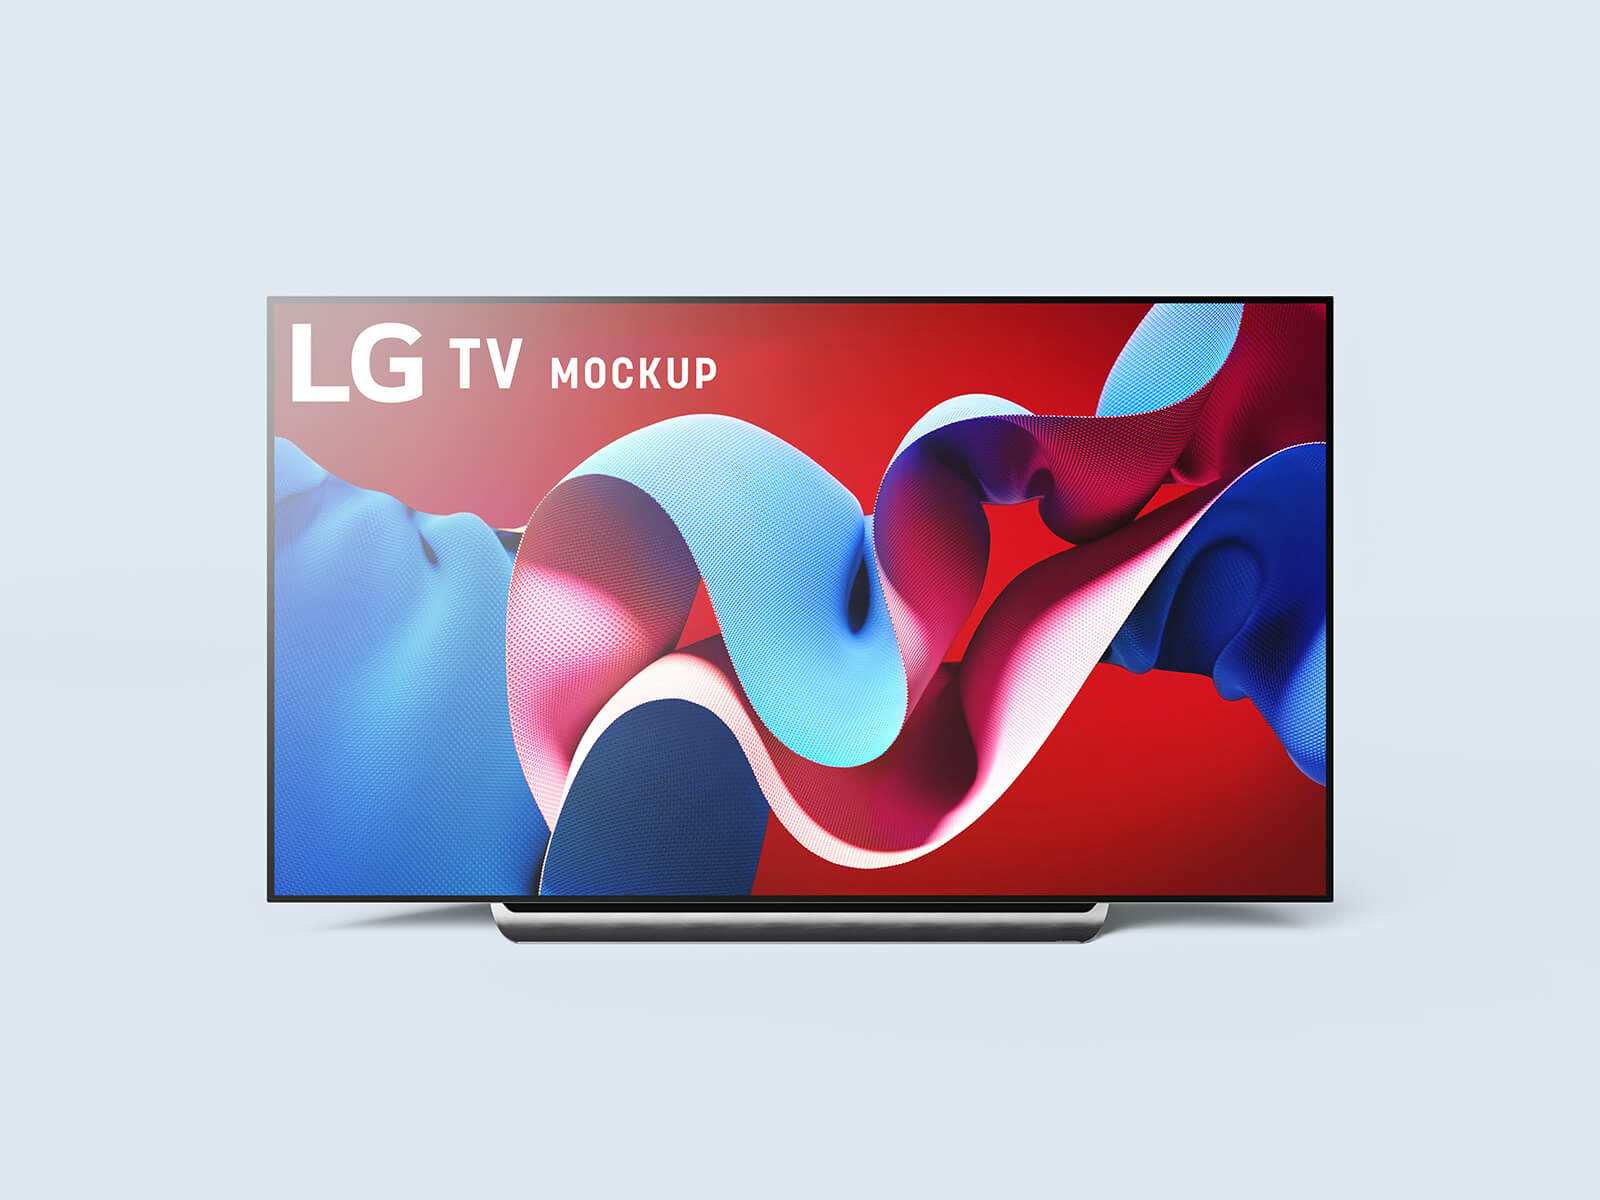 LG OLED TV Mockup